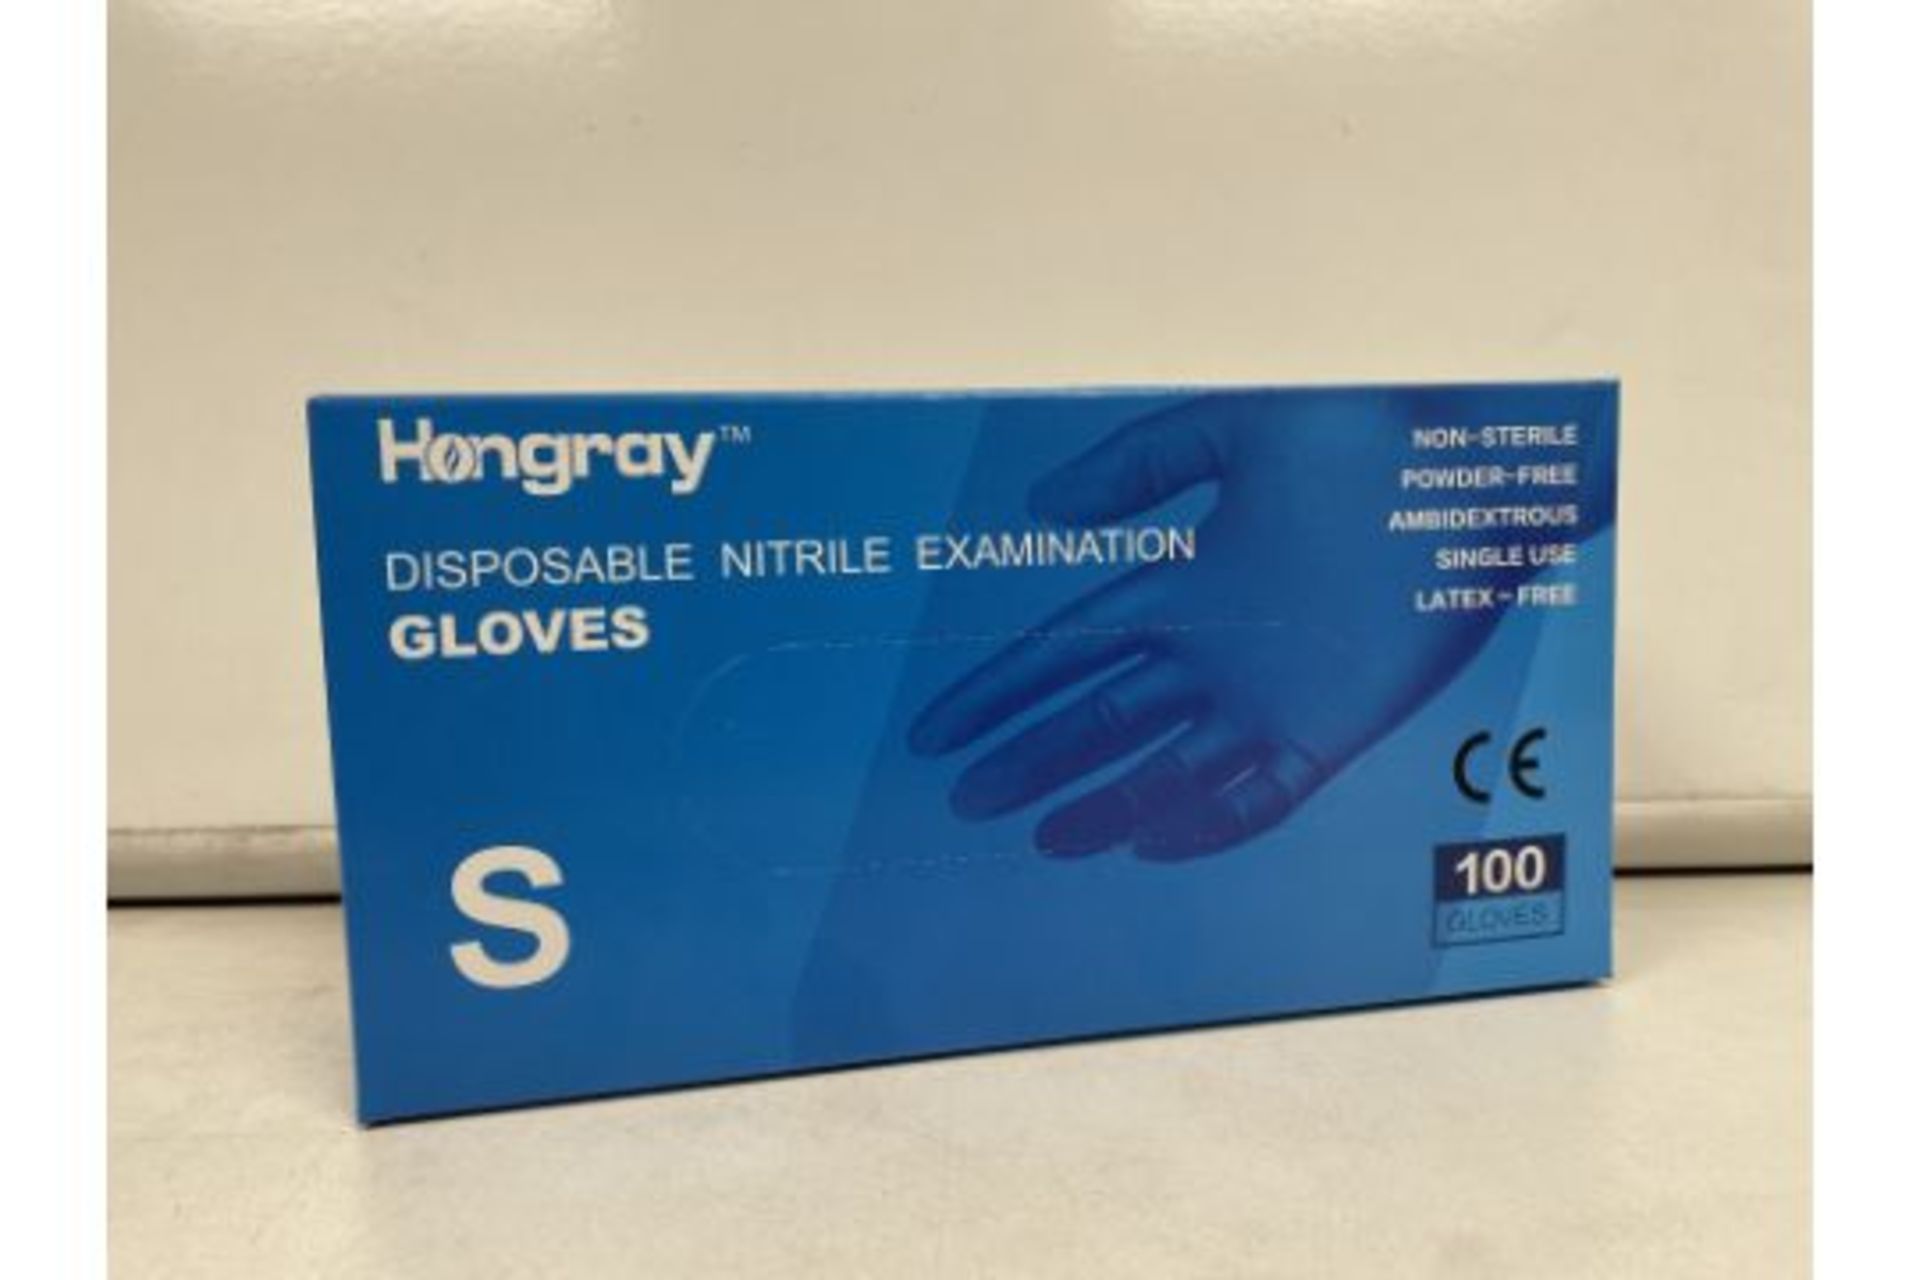 TRADE LOT 100 X NEW BOXES OF 100 HONGRAY DISPOSALE NITRILE EXAMINATION GLOVES. SIZE SMALL. NON-